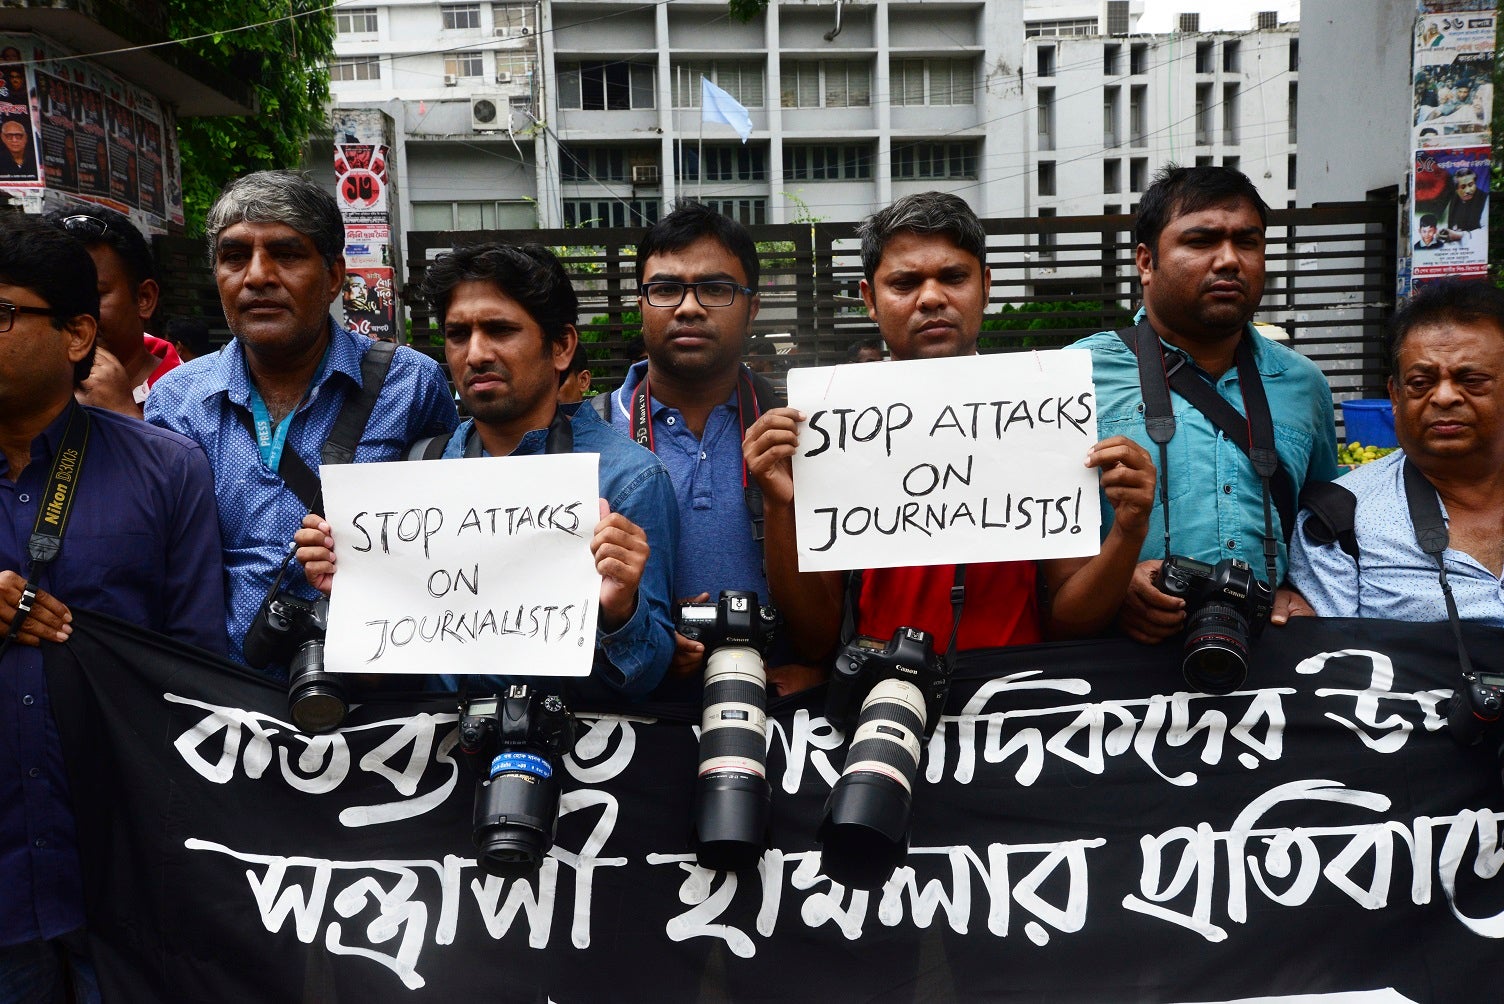 Bangladesh: Online Surveillance, Control